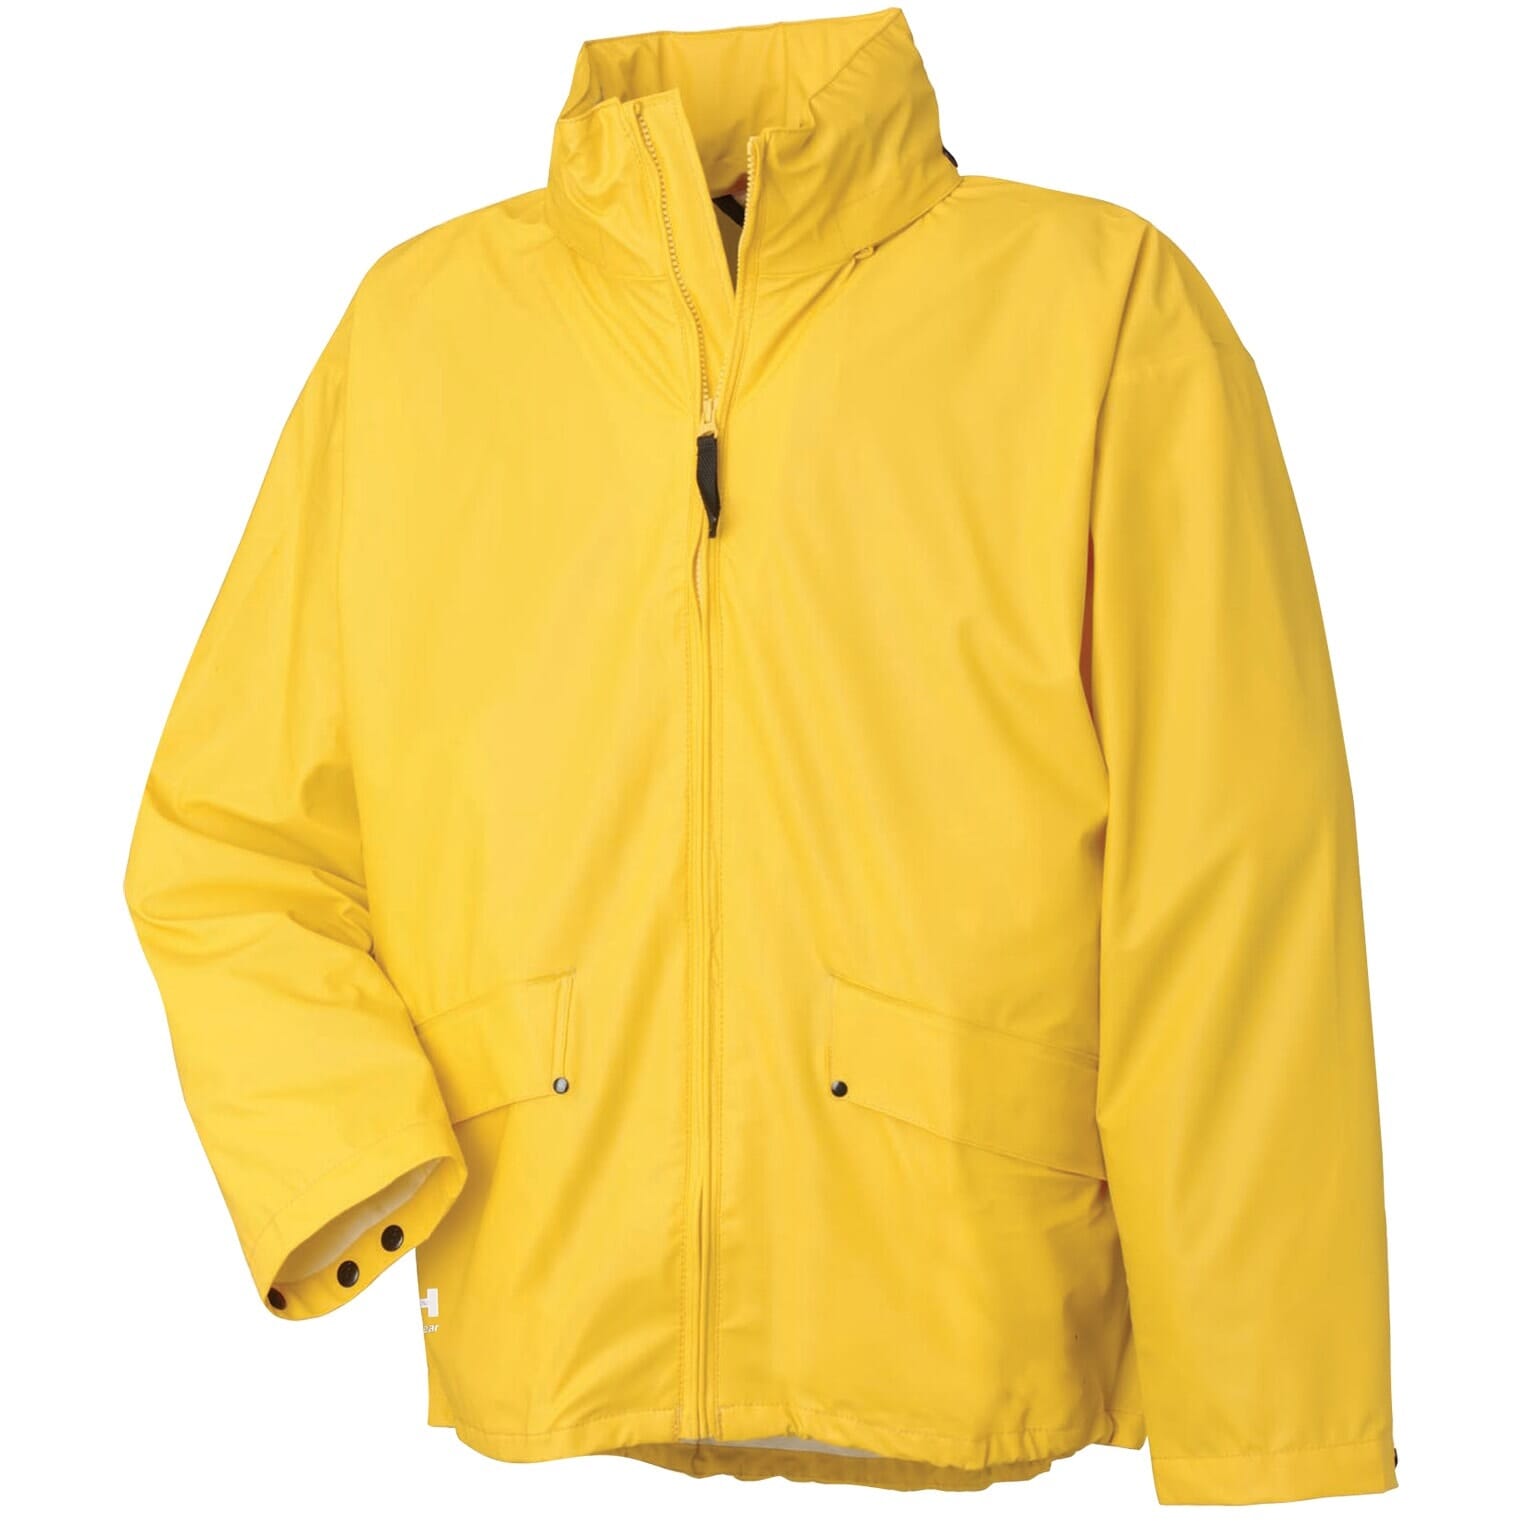 Verhandeling Misleidend Bestudeer Helly Hansen Rain Jacket: Waterproof Voss Collection Men's, Multiple Sizes  and Colors Available - Western Safety